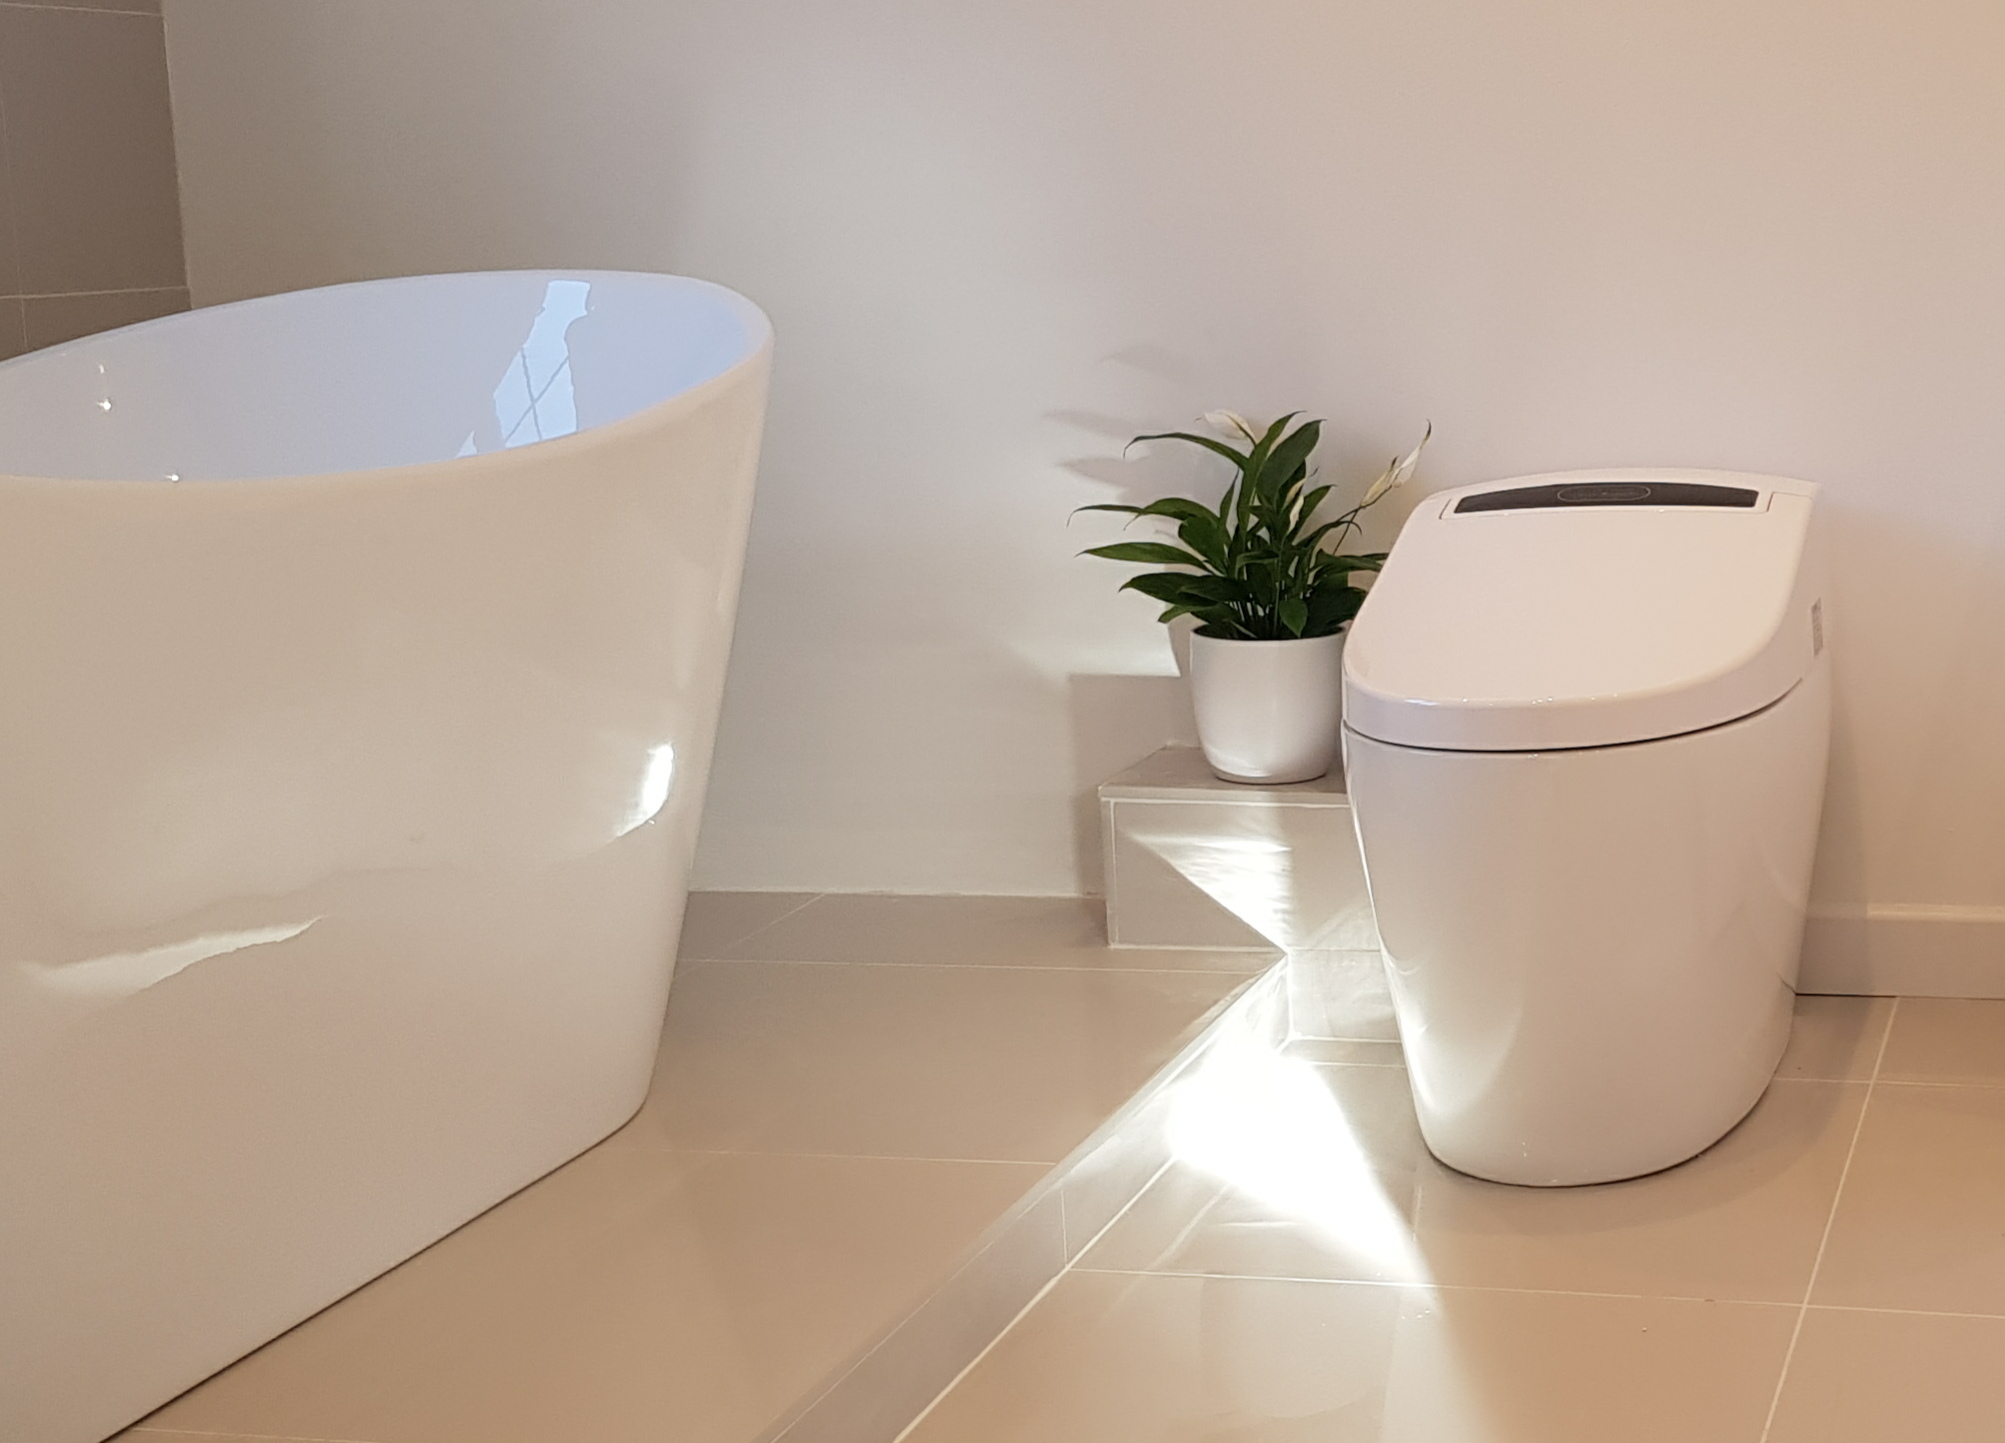 FLORY EU Bidet Electric Digital Intelligent Toilet Seat UK-STANDARD FDB600 Energy-Saving Technology,Eco-Friendly,Water & Seat Heater,Warm Air Dry-Elongated